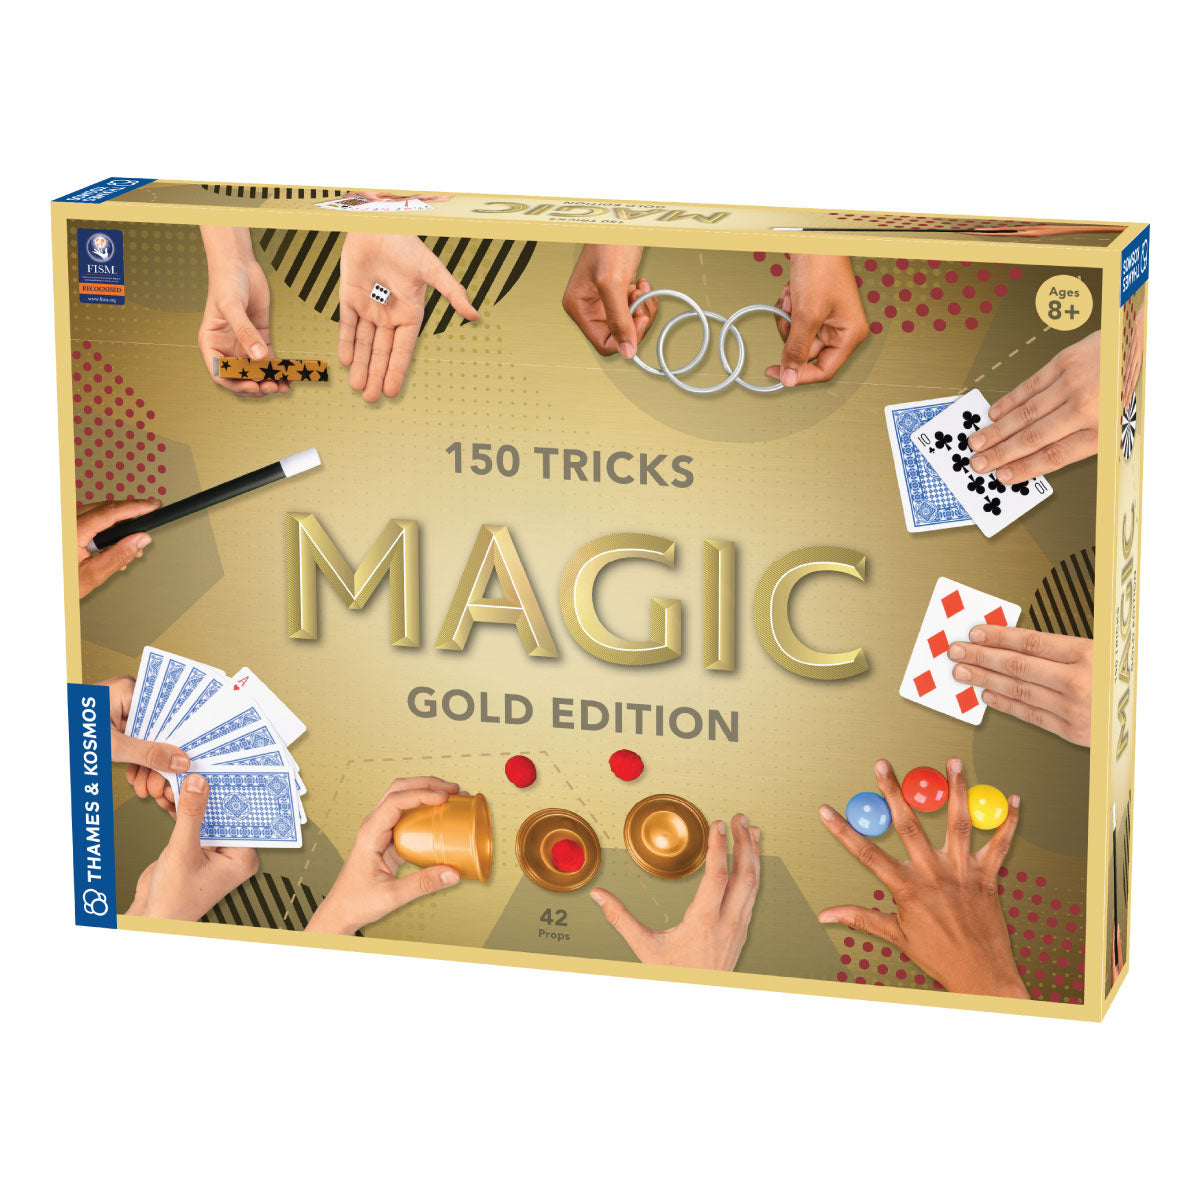 Magic: Gold Edition 150 Tricks from Thames & Kosmos